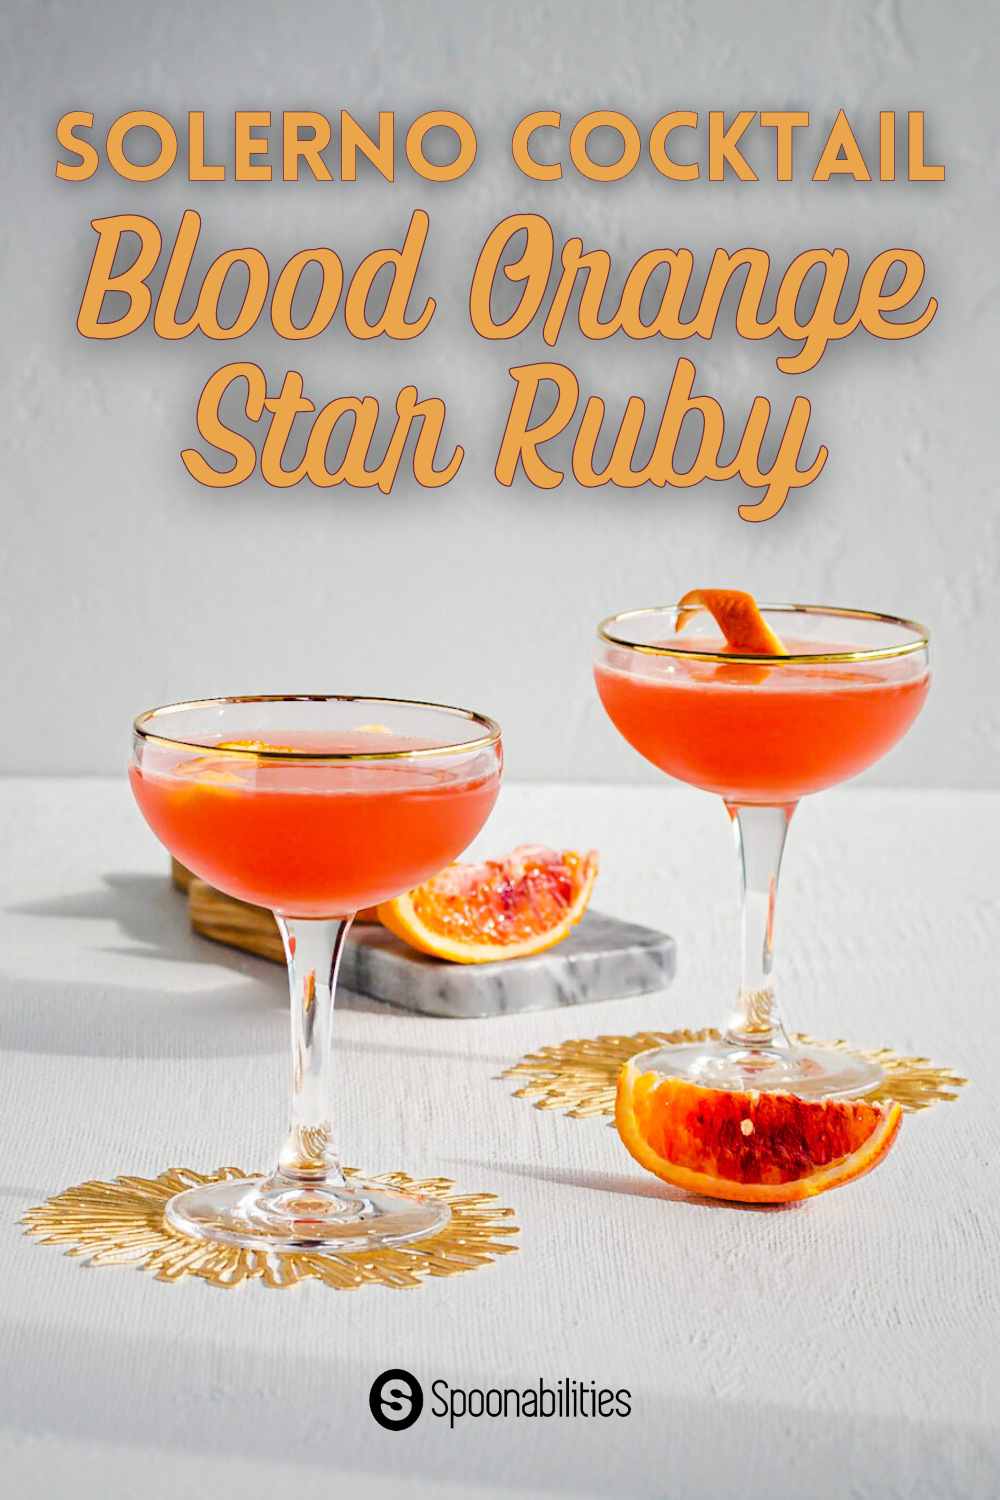 Blood orange solerno cocktails with blood orange zest as garnish and blood orange wedges